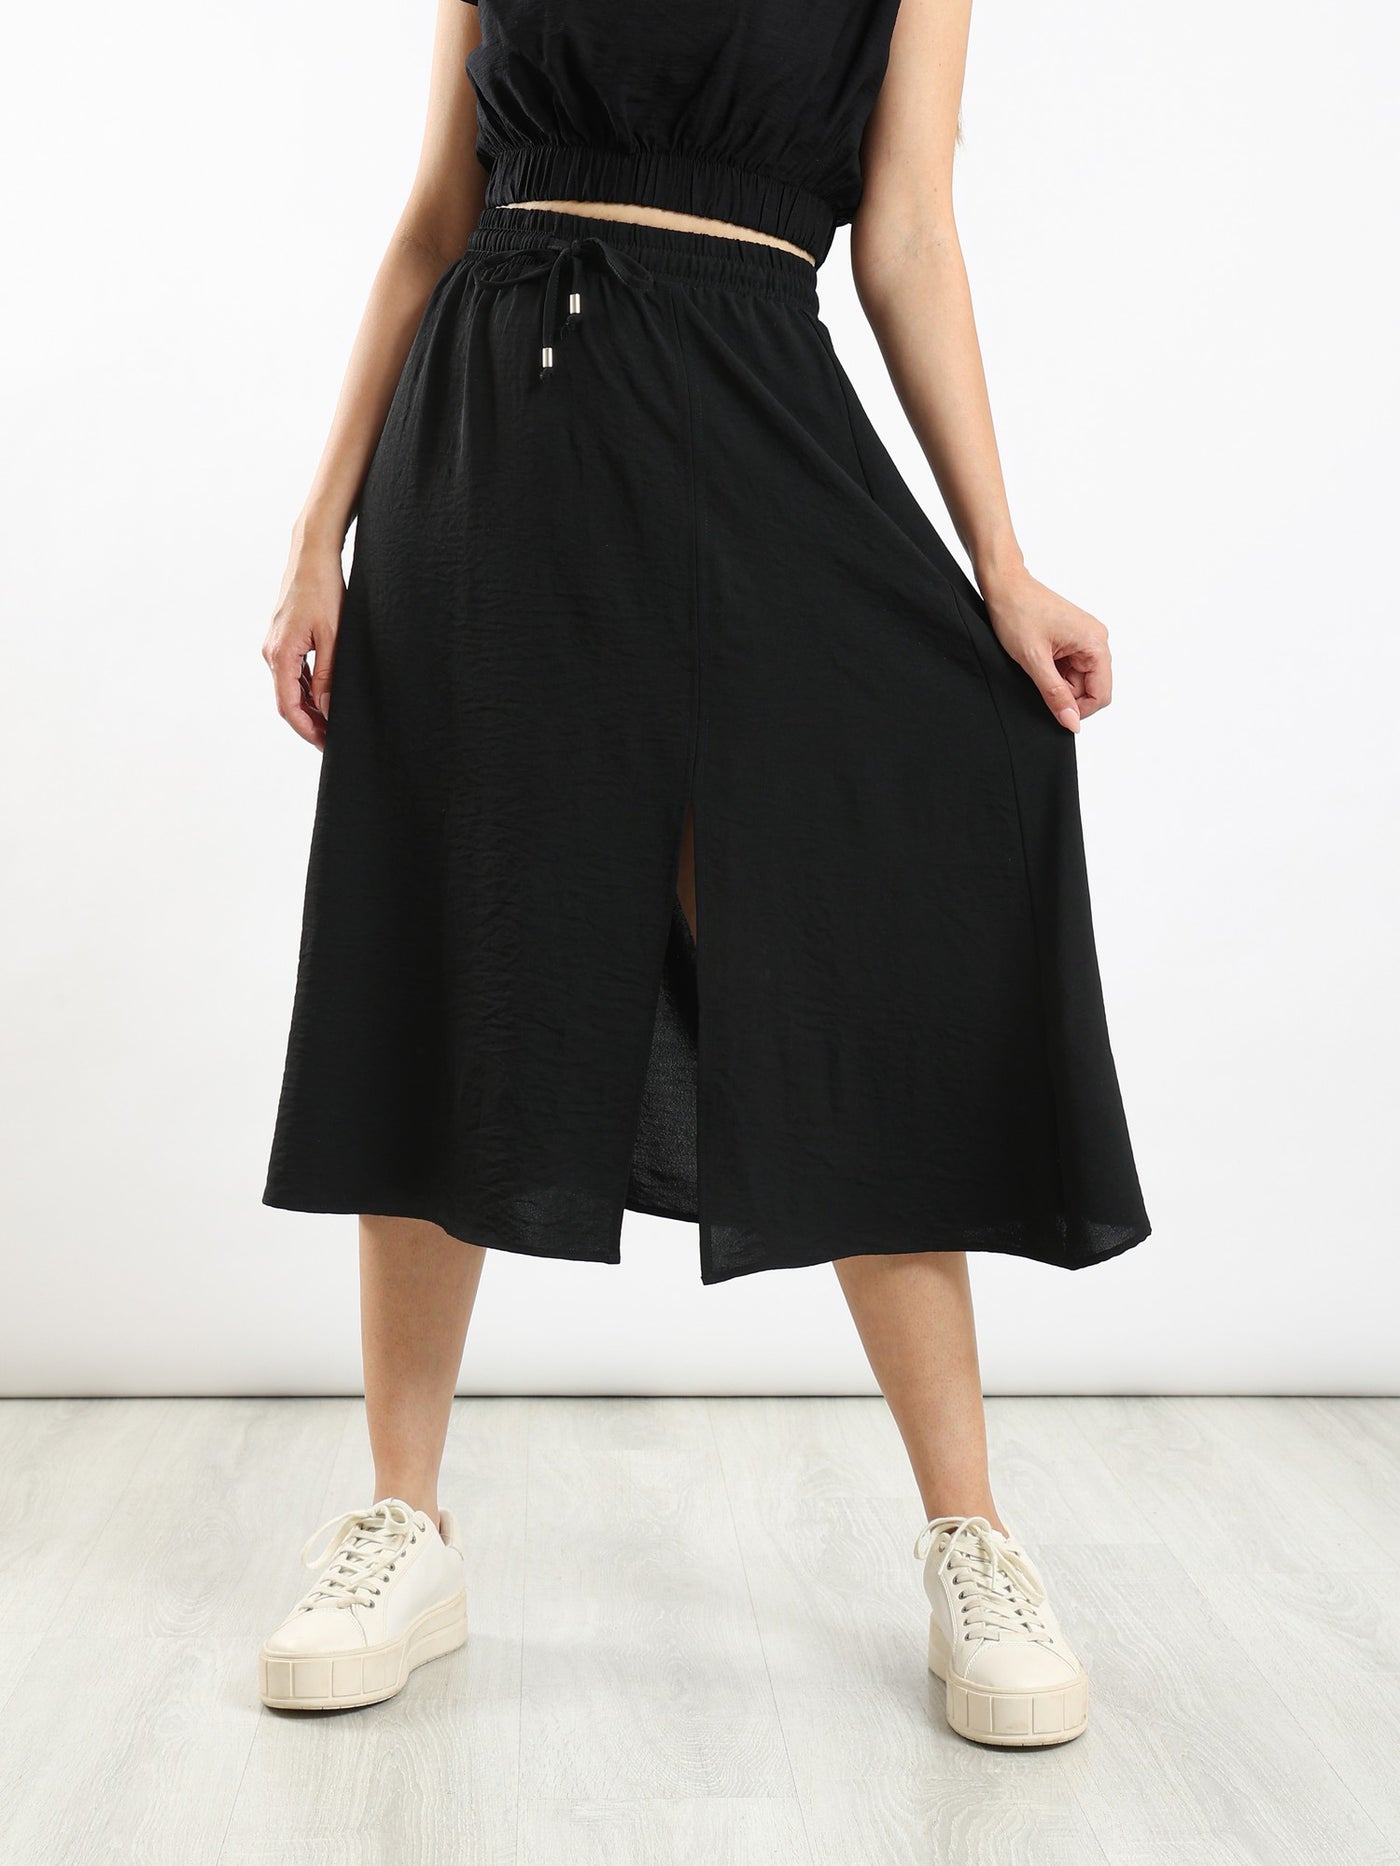 Skirt - Drawstring - Midi Length